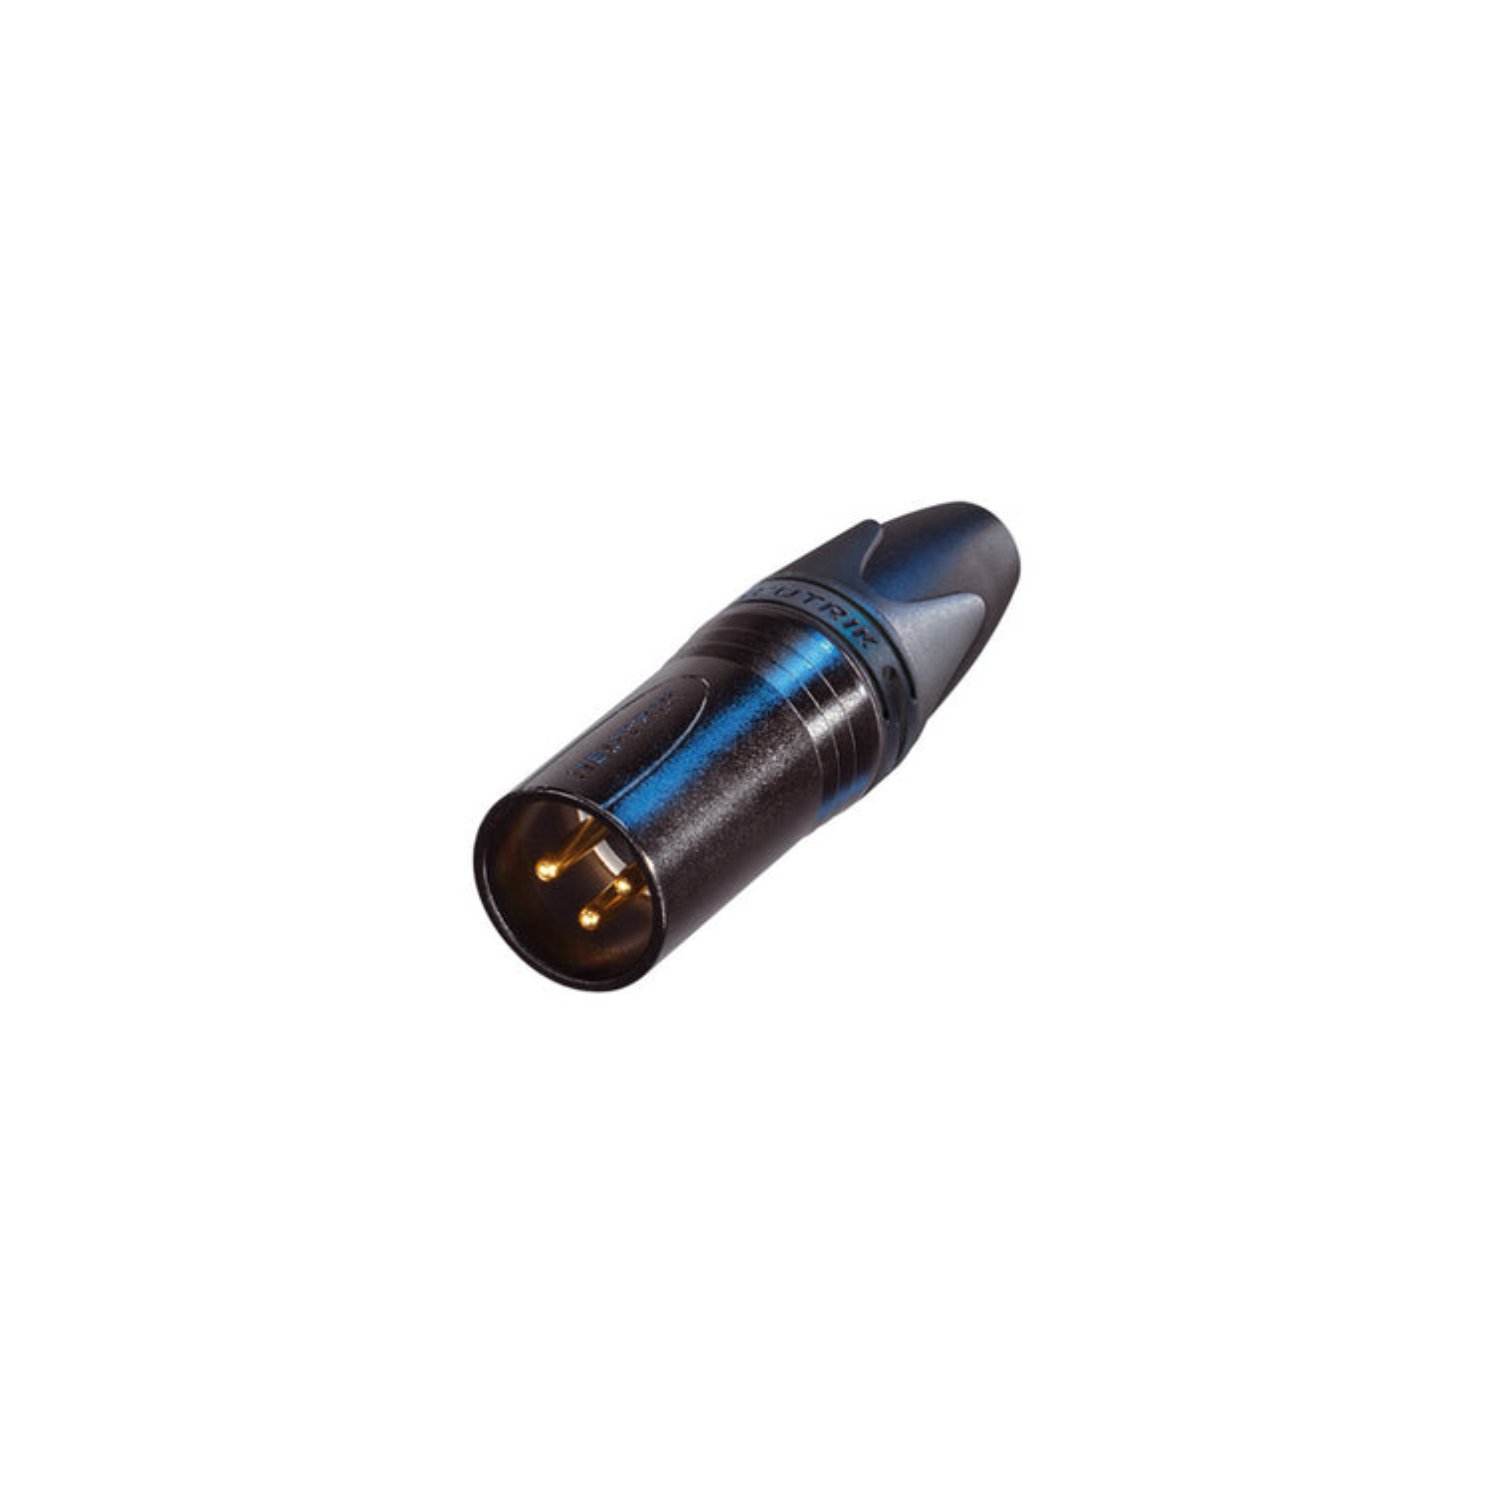 Neutrik 3 Pin XLR Male Connector Black with Gold Pins